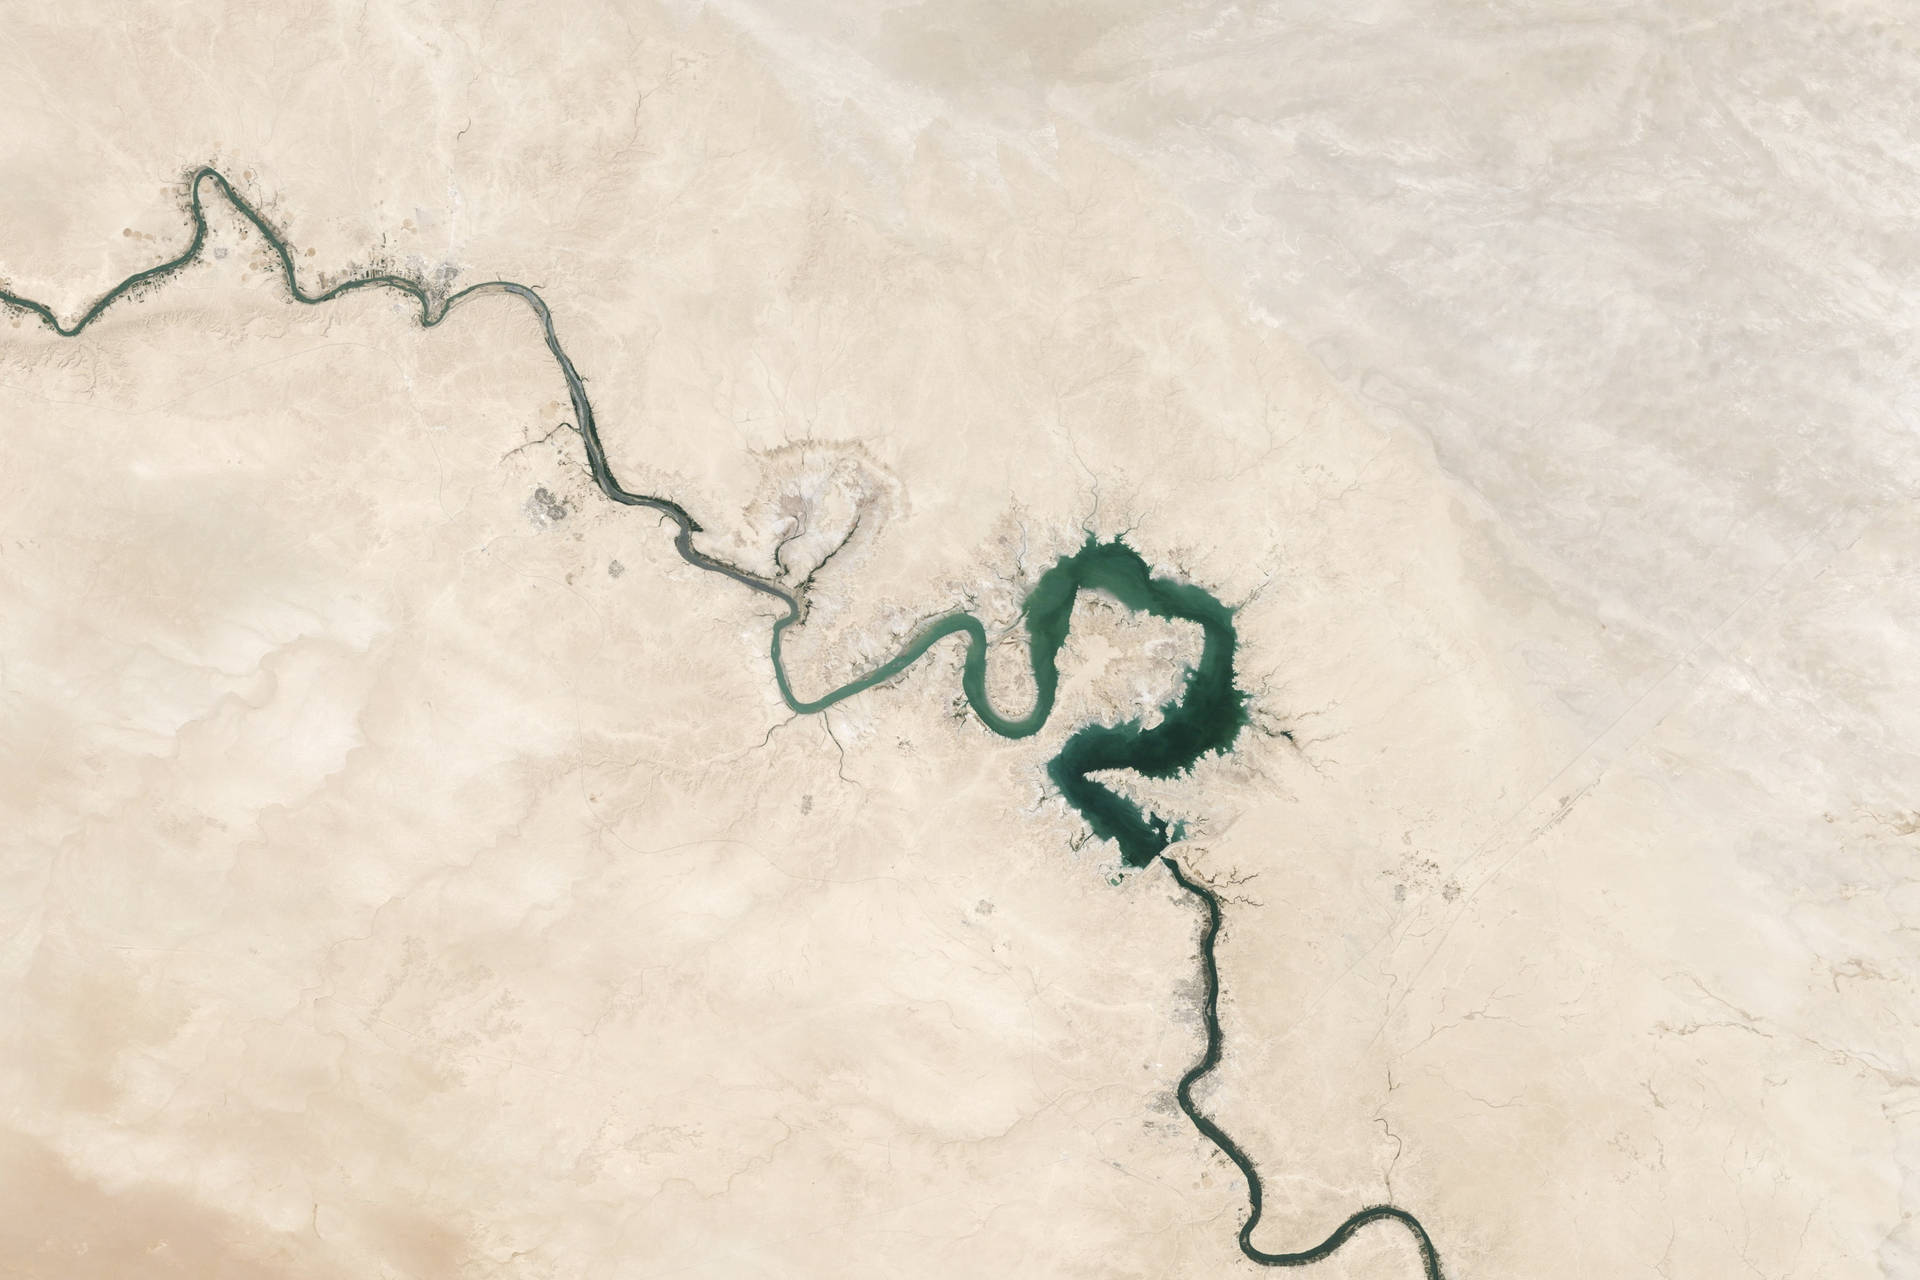 Iraq Euphrates River Illustration Background